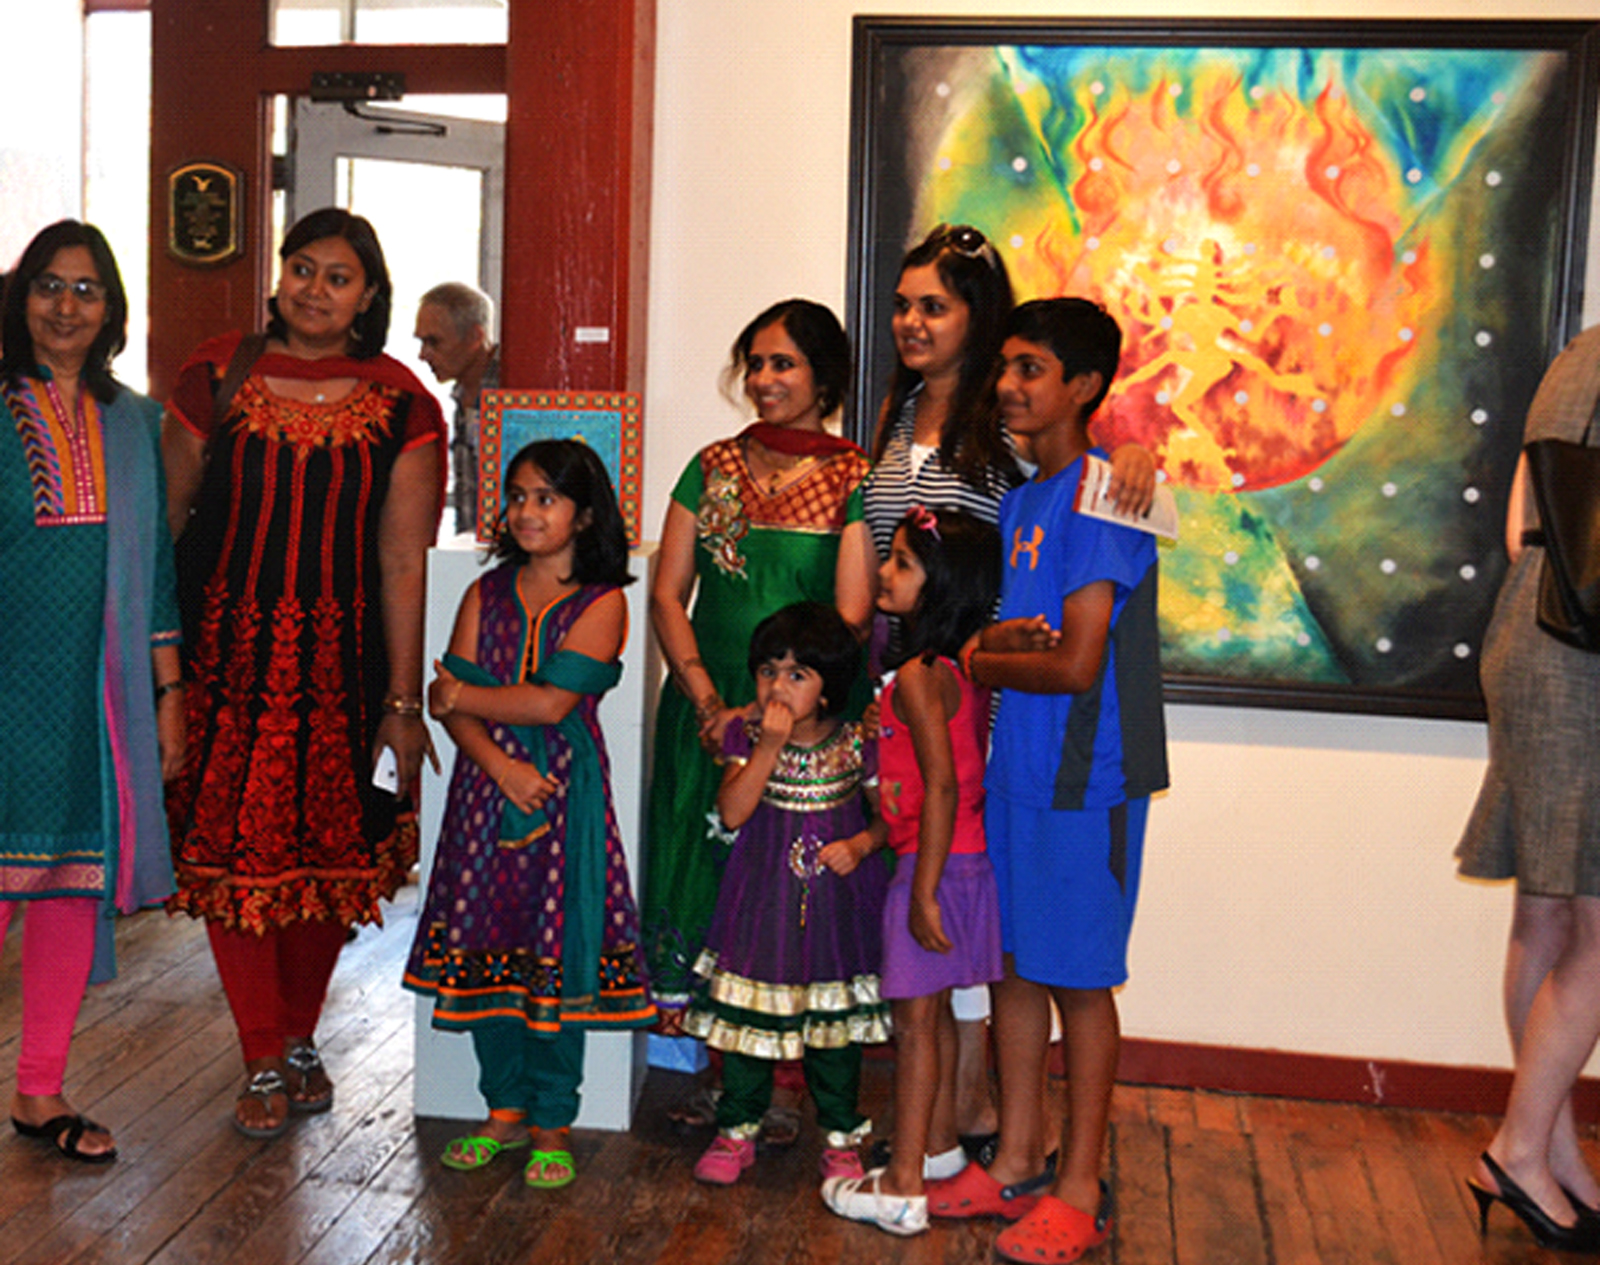 Algorhythm at the Phoenix Art Gallery, celebrating South Asian Art